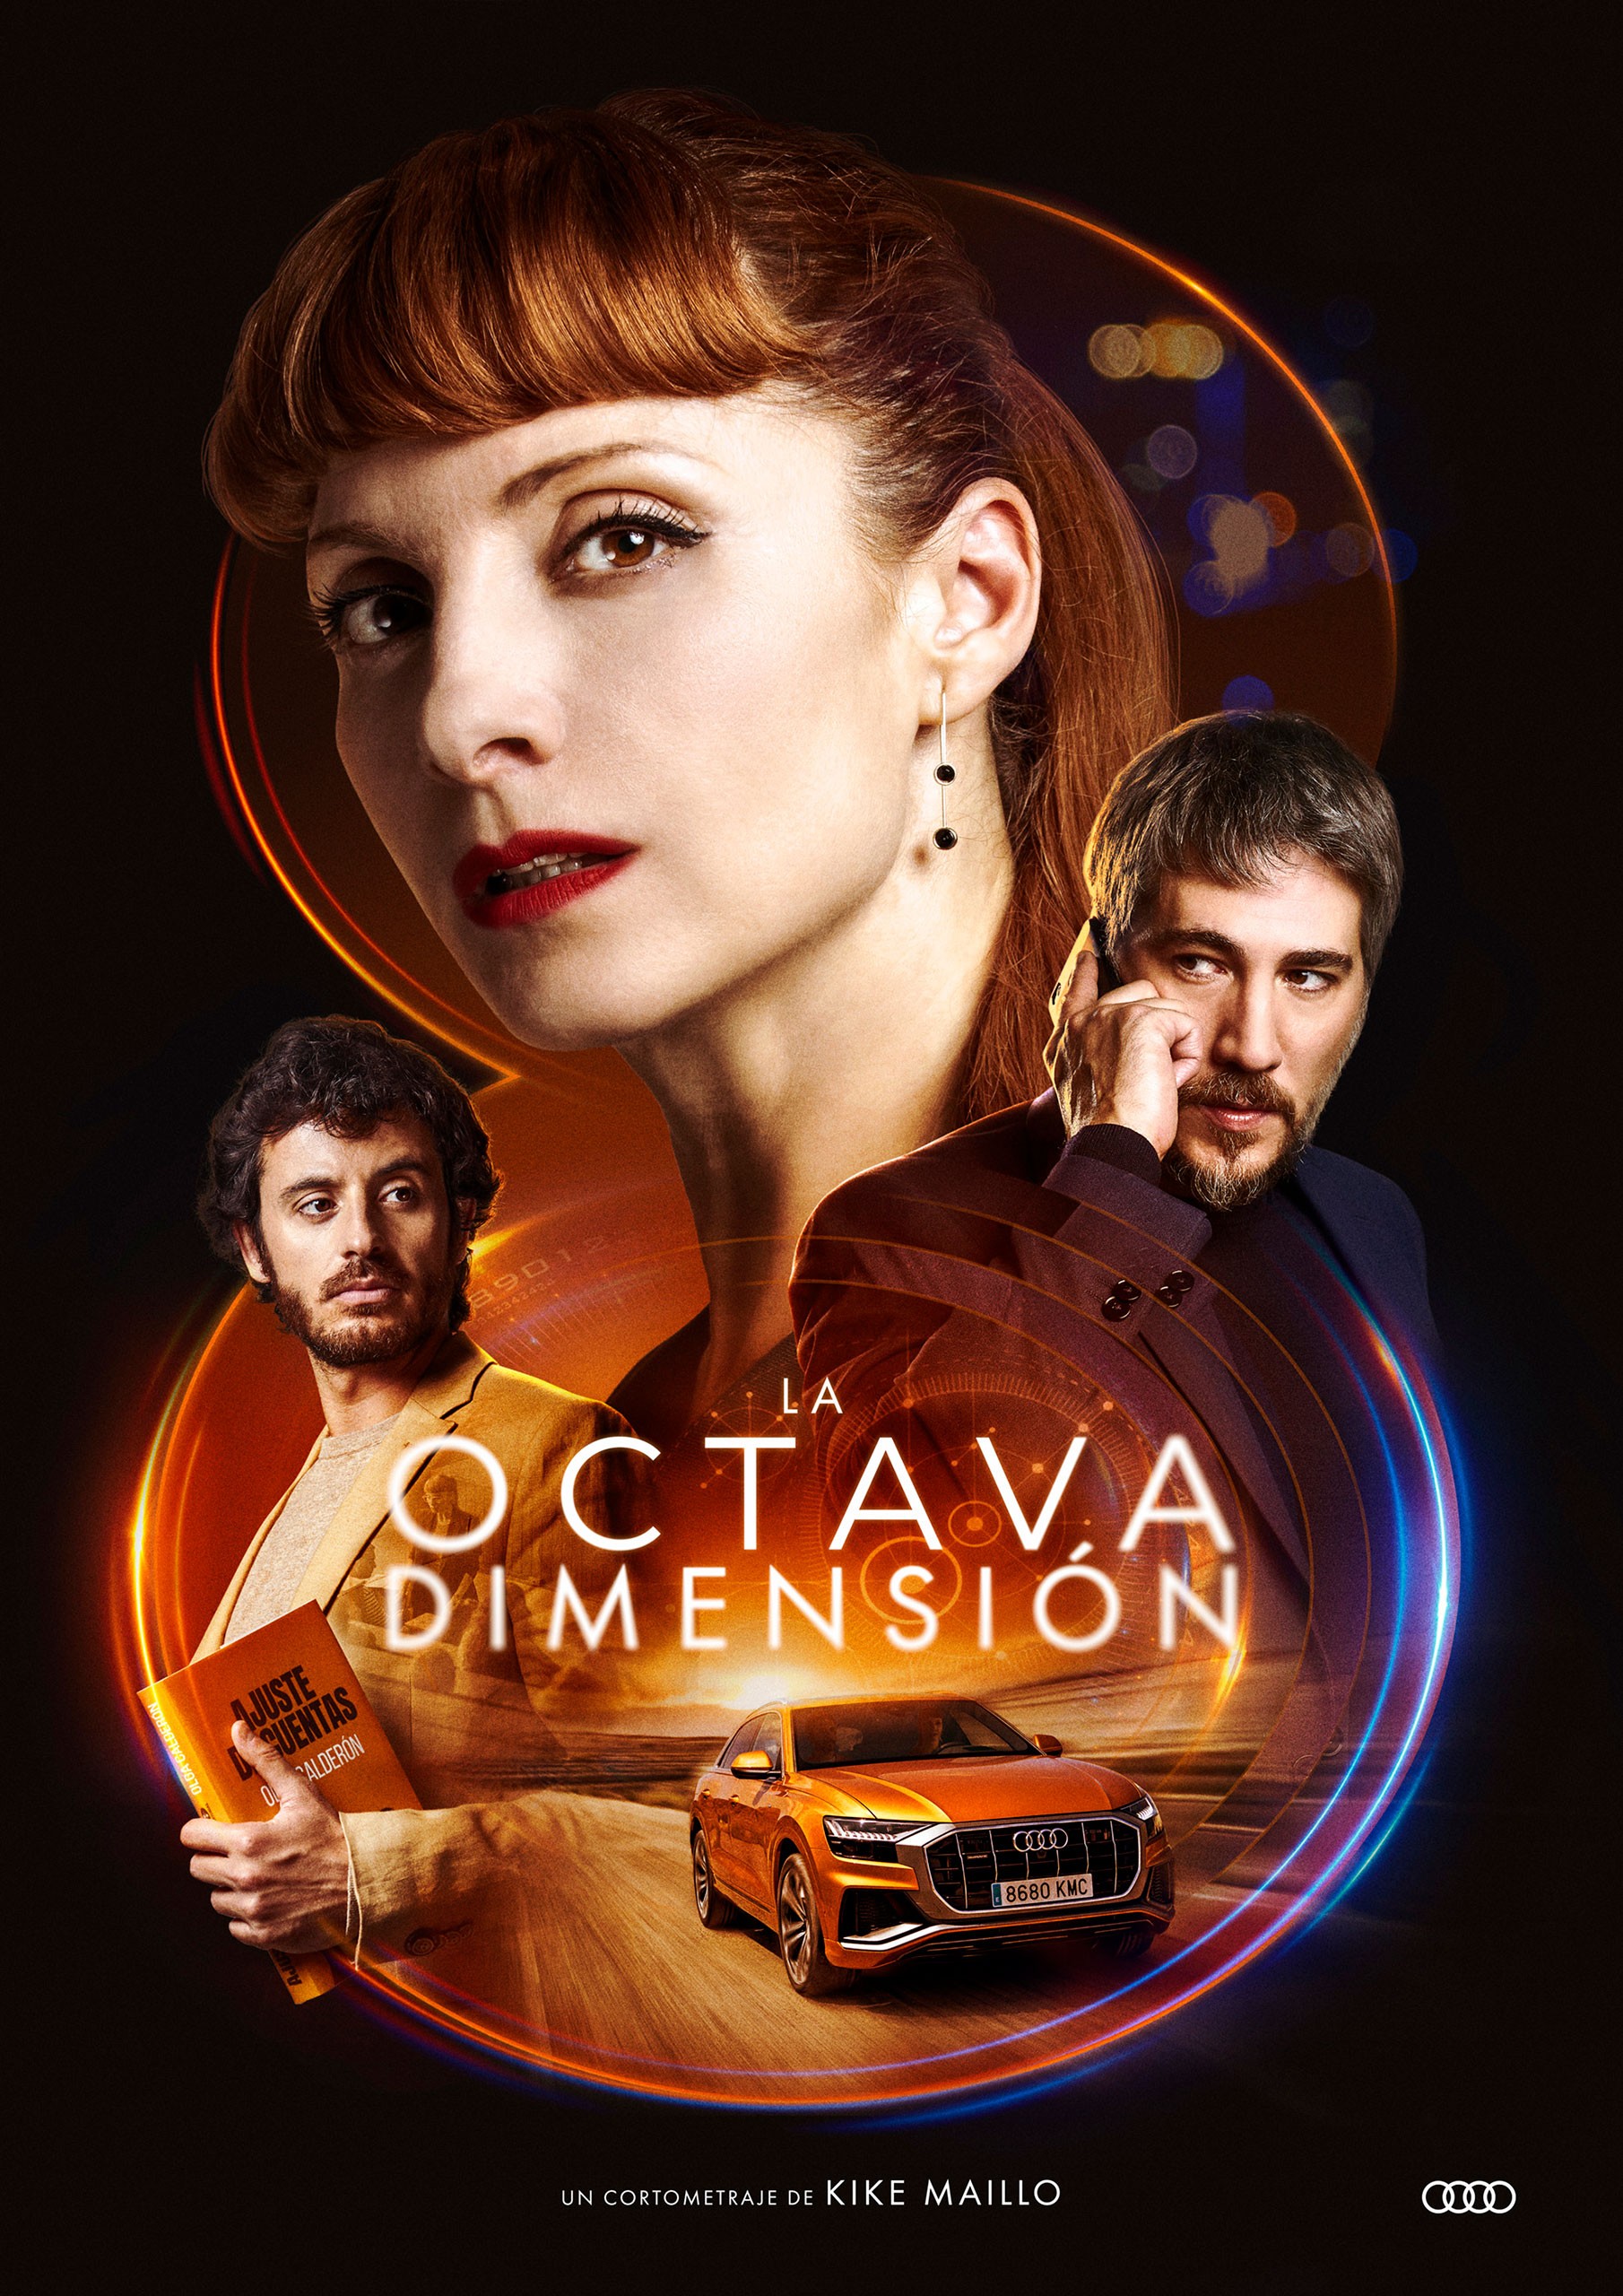 Mega Sized Movie Poster Image for La octava dimensin